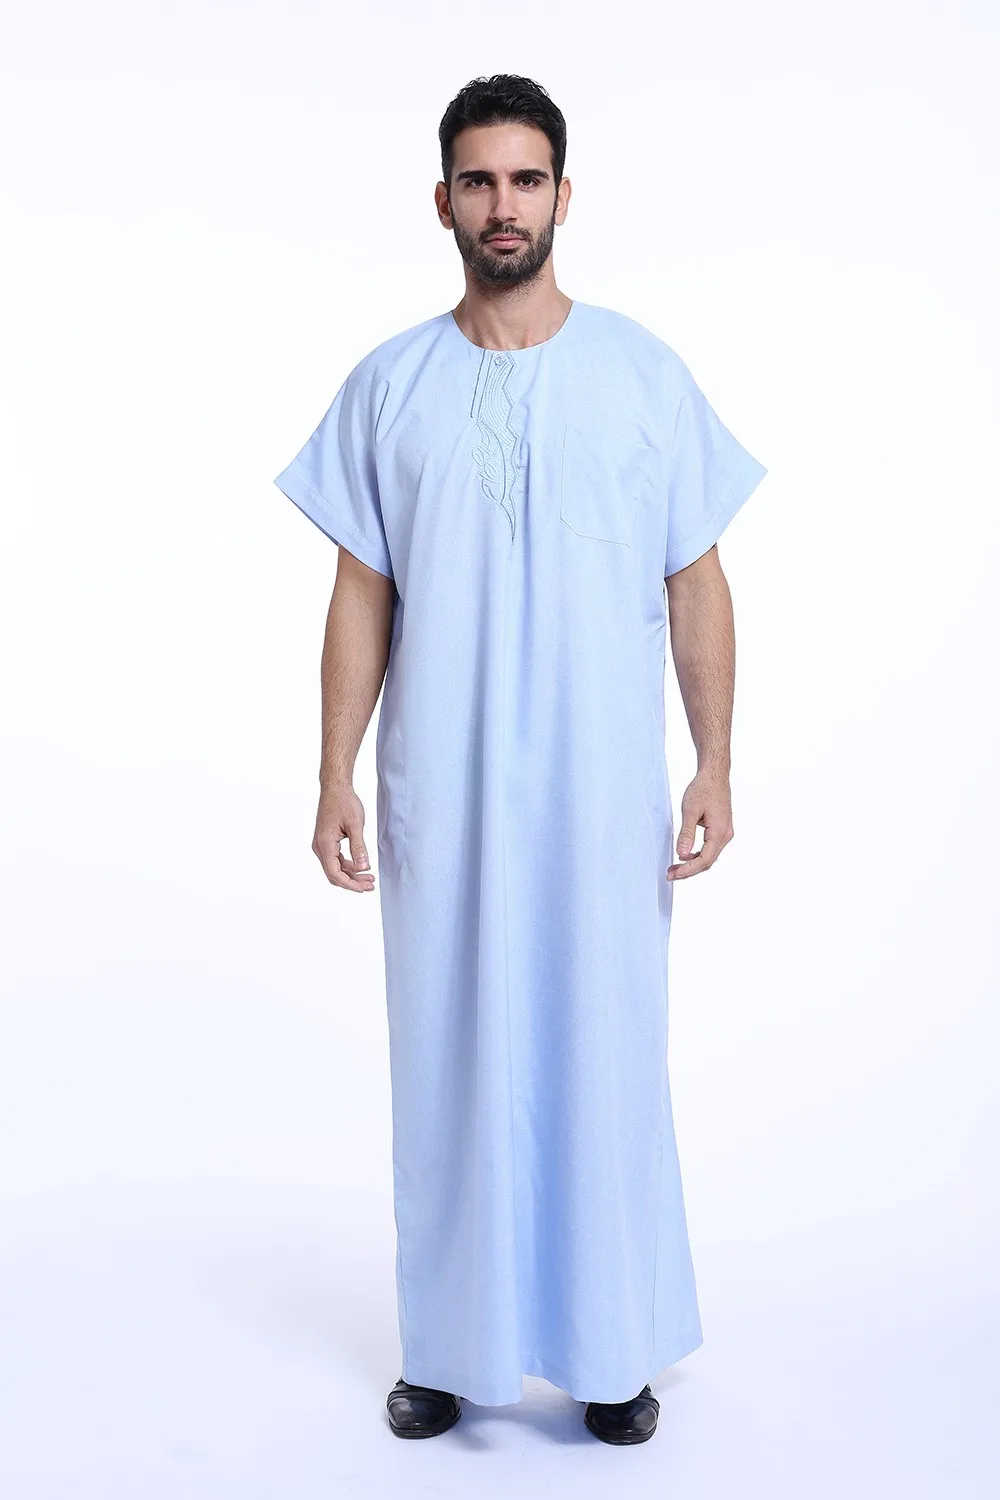 2017 latest Islamic Clothing Men's Abaya Muslim Throbe, View Islamic ...